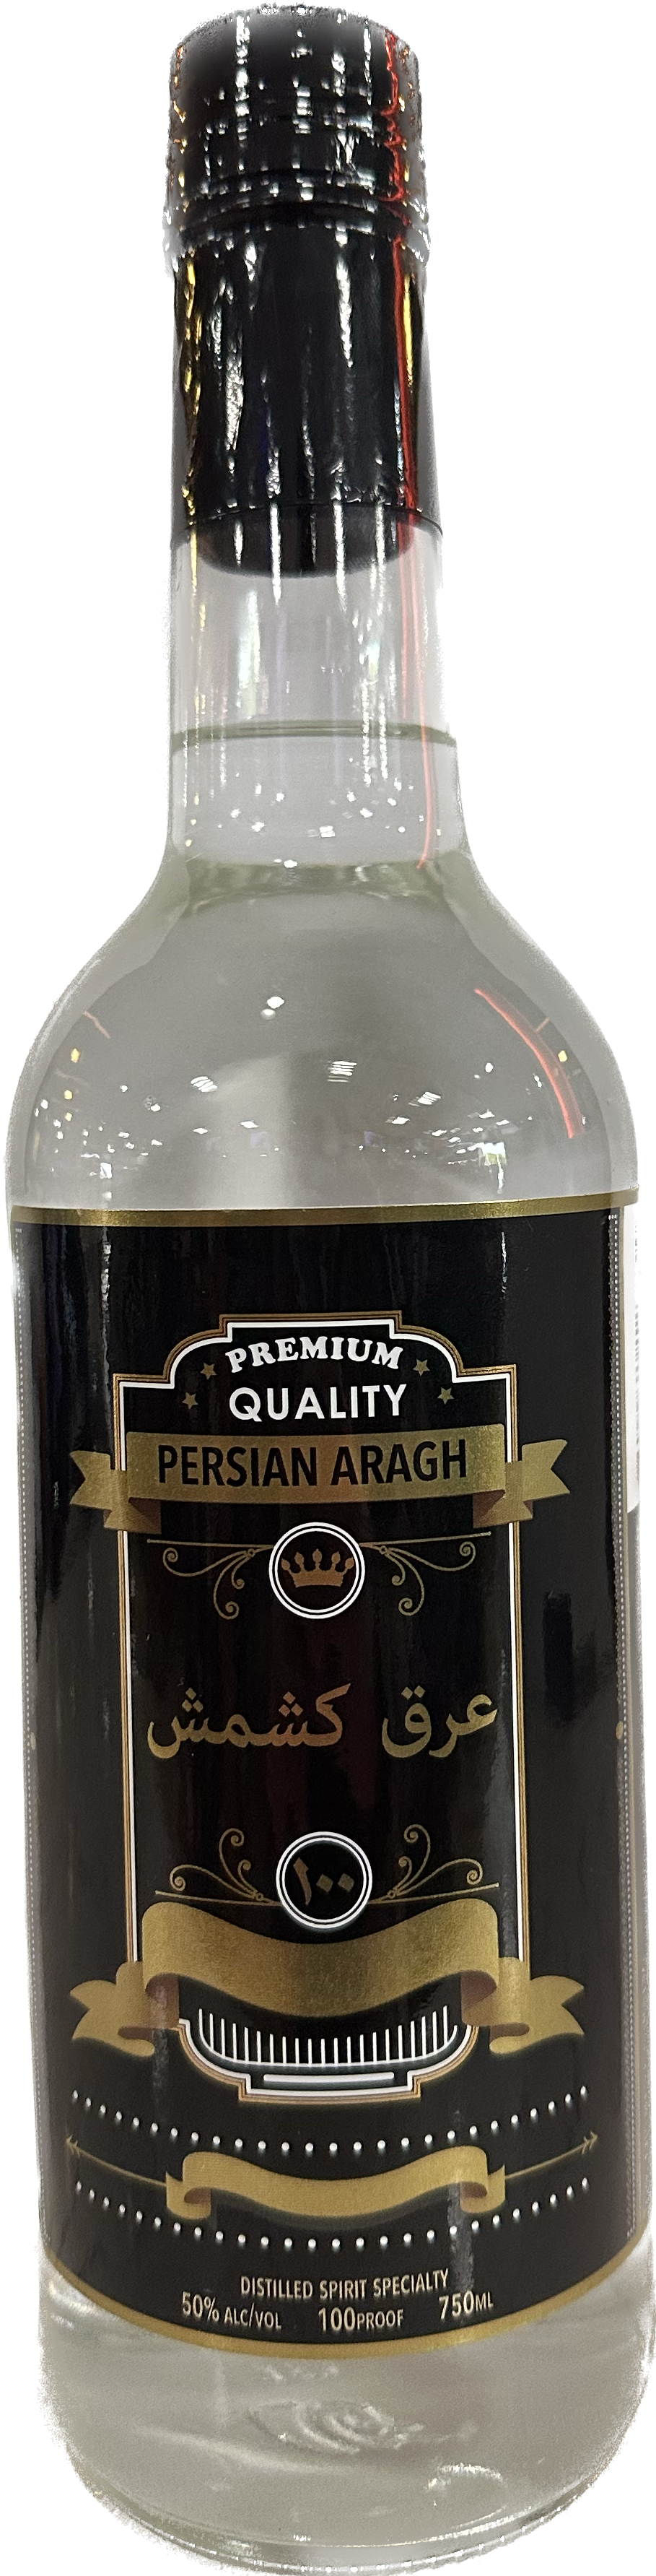 PERSIAN ARAGH RAISEN VODKA CALIFORNIA 100PF 750ML